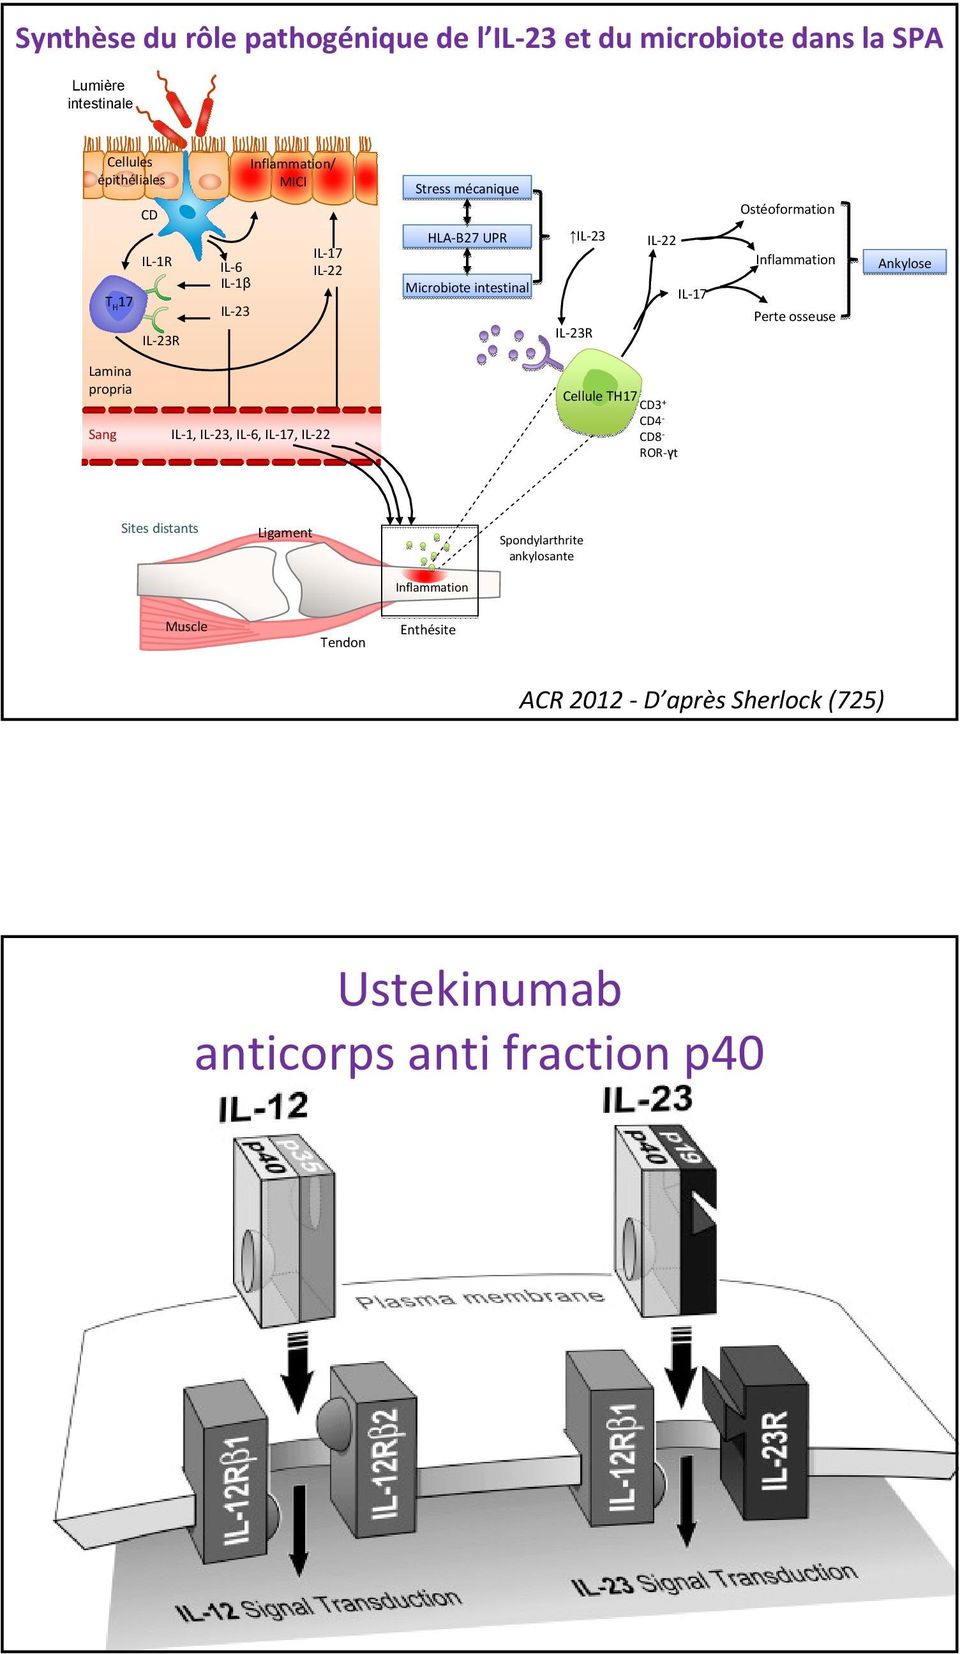 Inflammation Perte osseuse Ankylose Lamina propria Sang IL 1, IL 23, IL 6, IL 17, IL 22 Cellule TH17 CD3 + CD4 CD8 ROR γt Sites distants